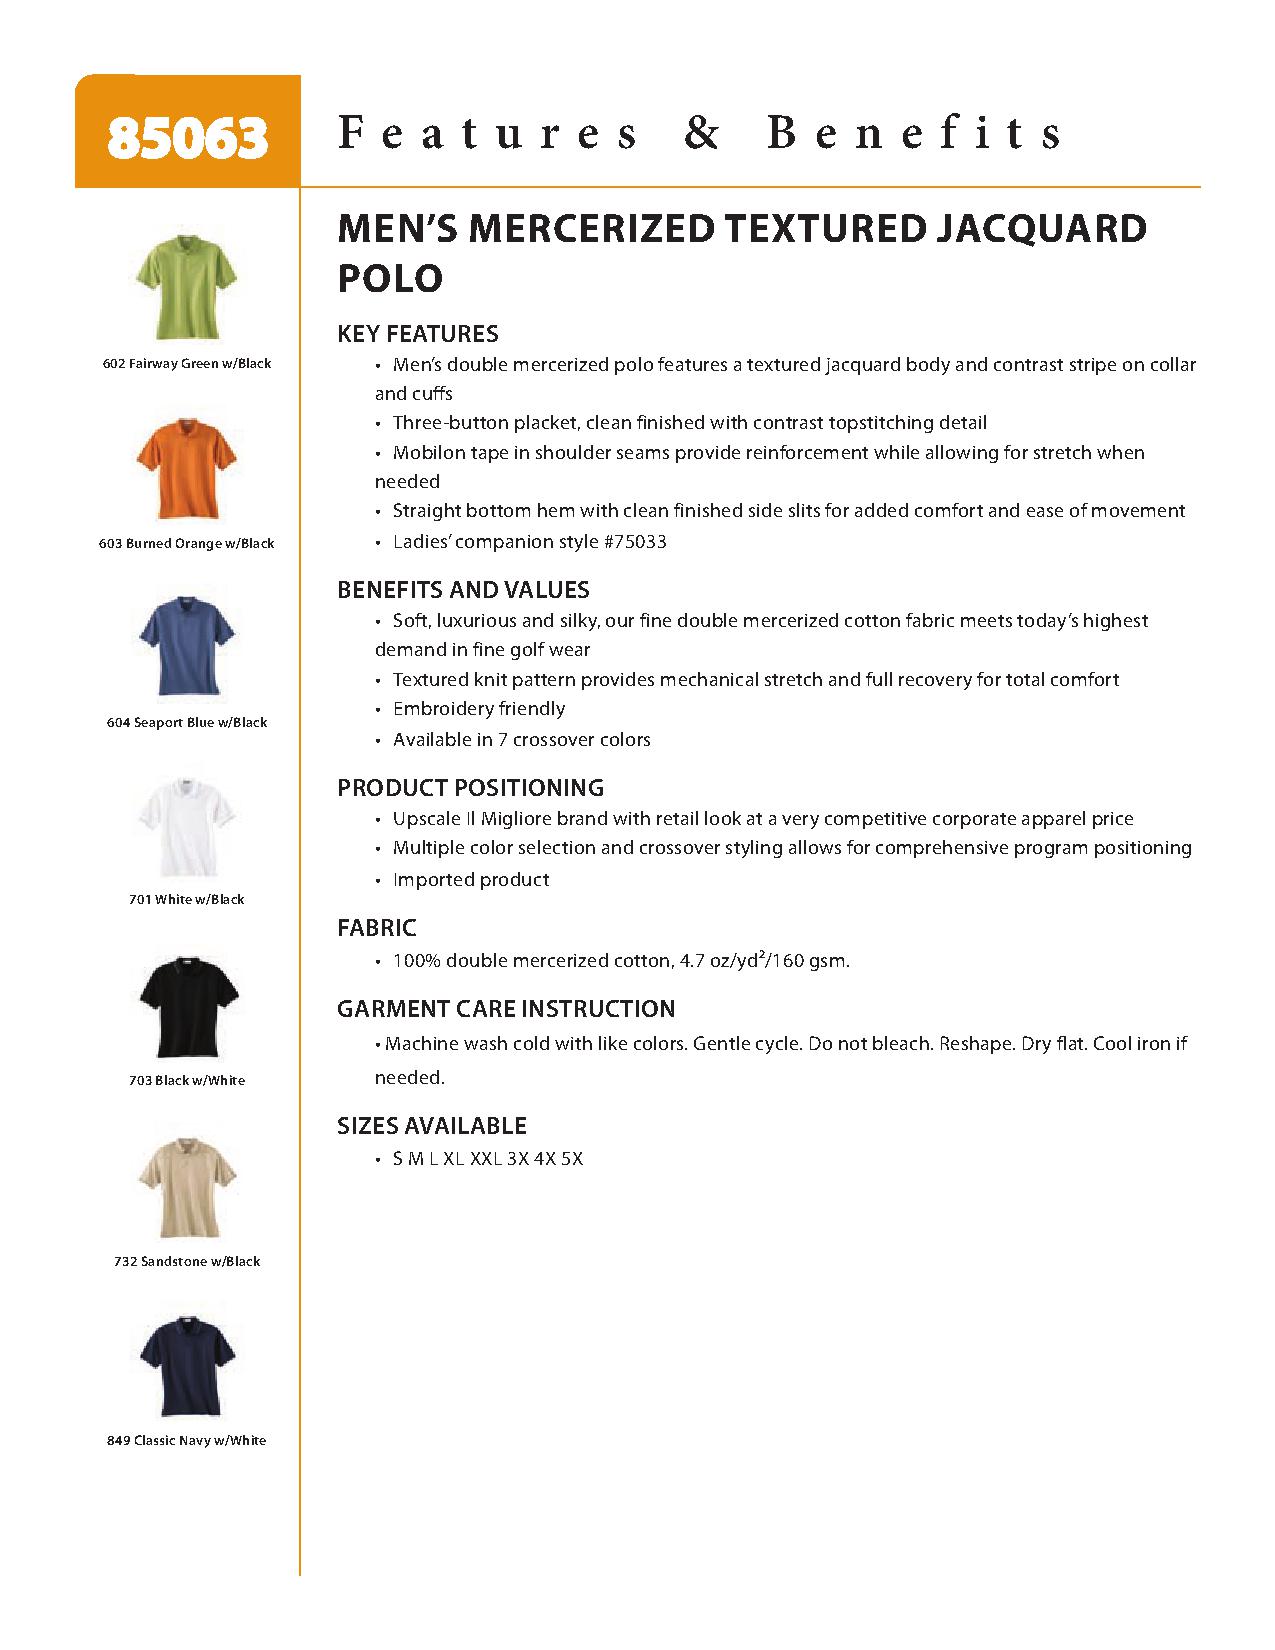 Ash City Textured 85063 - Men's Mercerized Textured Jacquard Polo